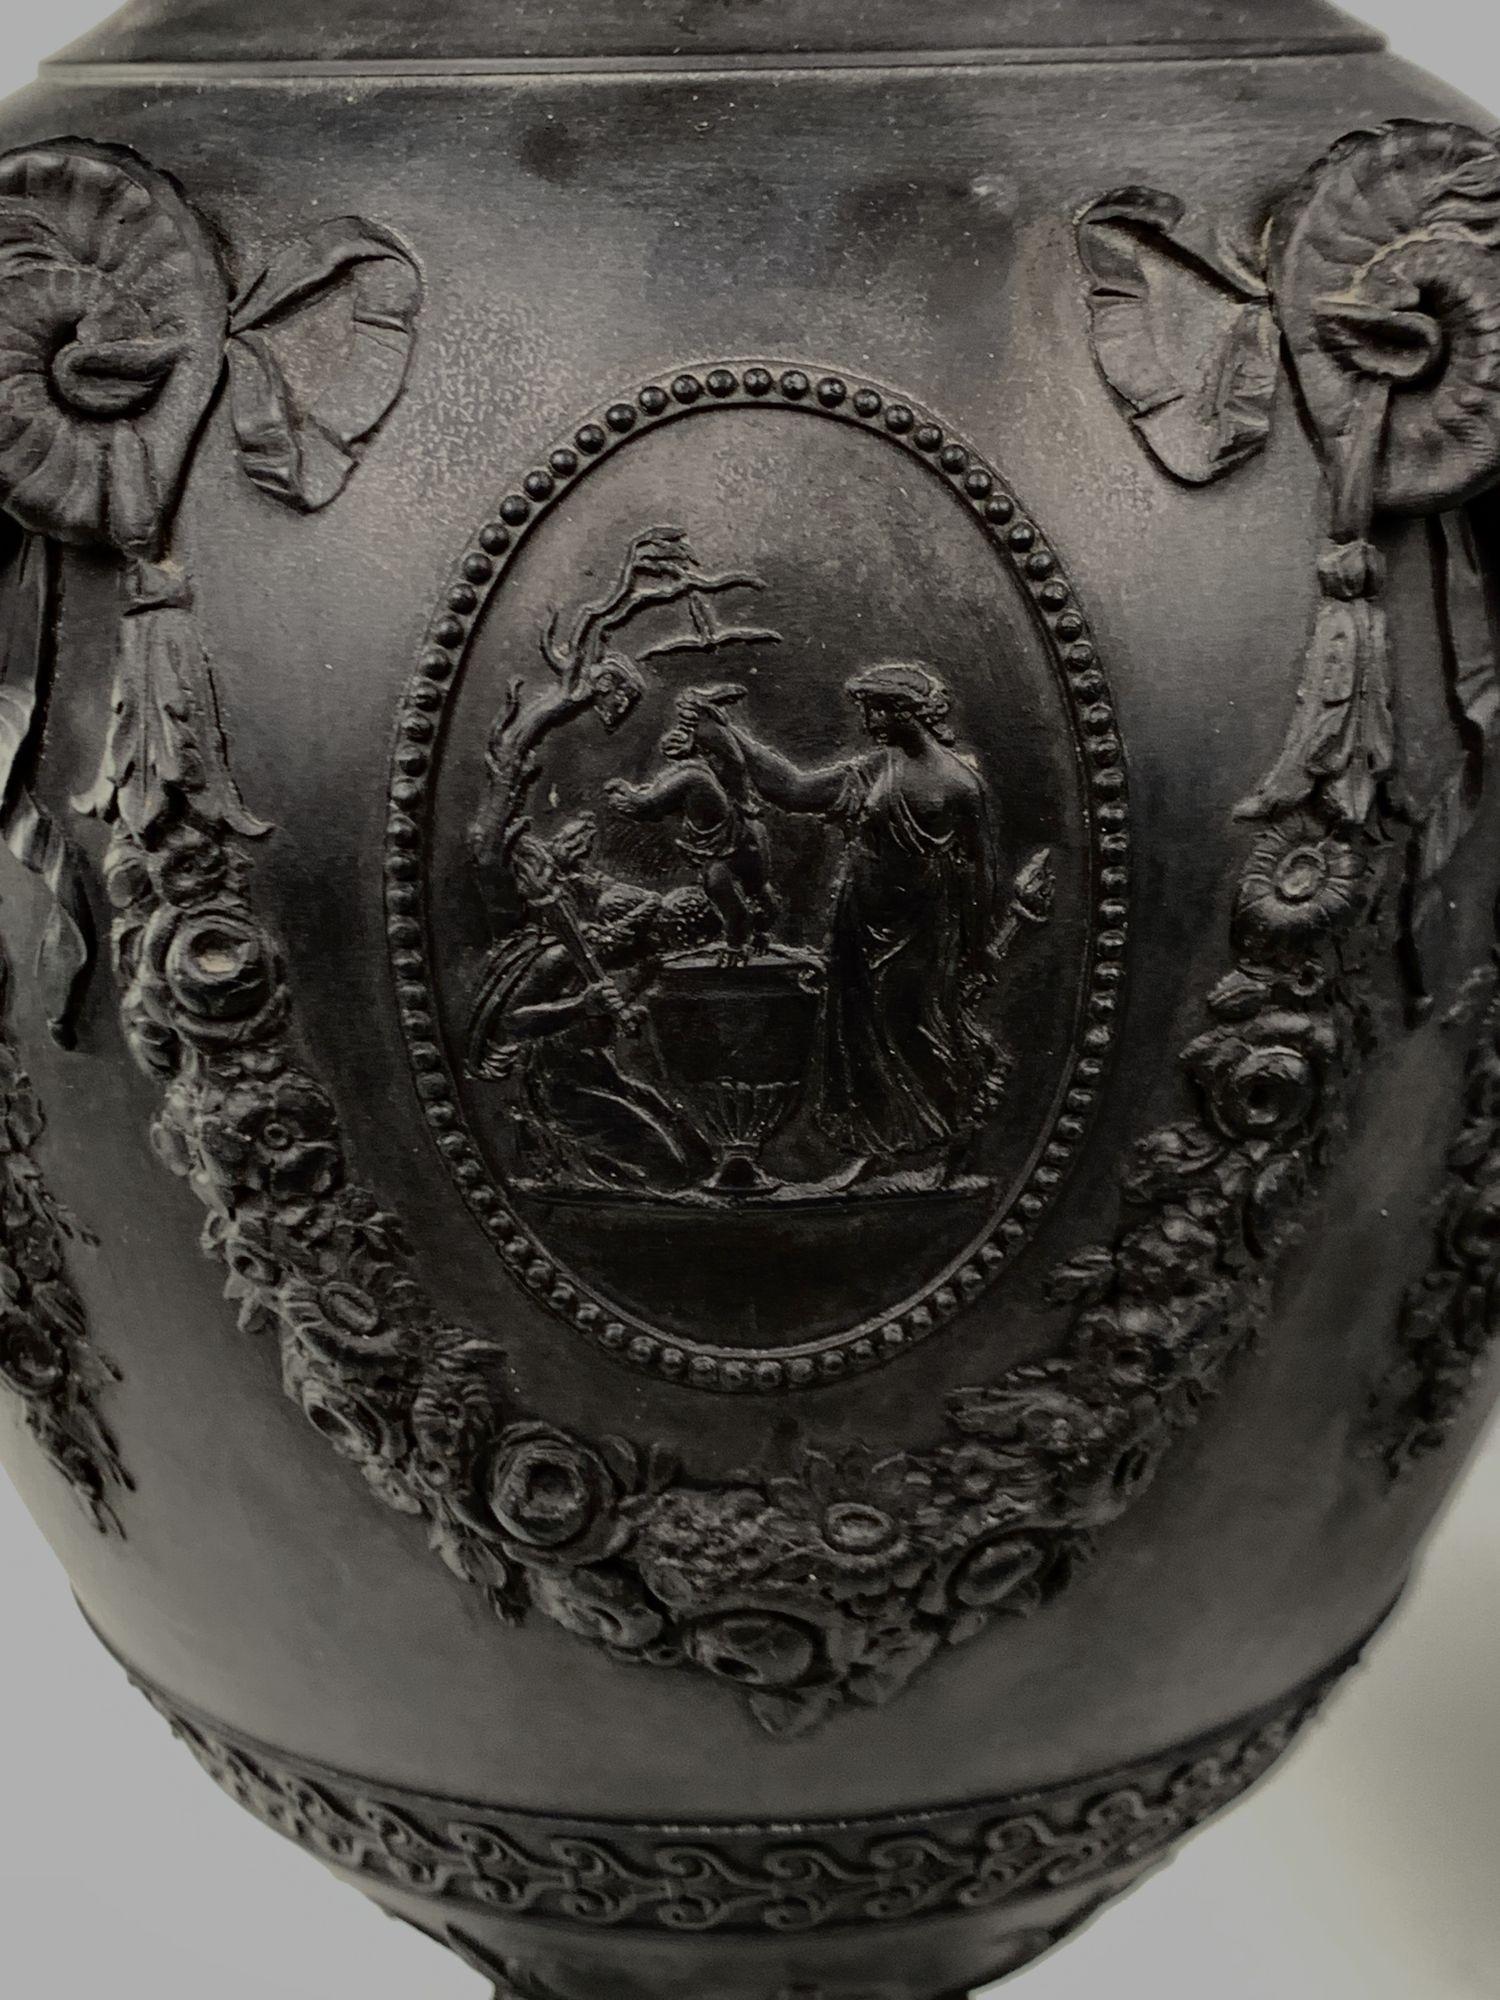 Pair Wedgwood Black Basalt Urn Neoclassical Made in England Circa 1840 1